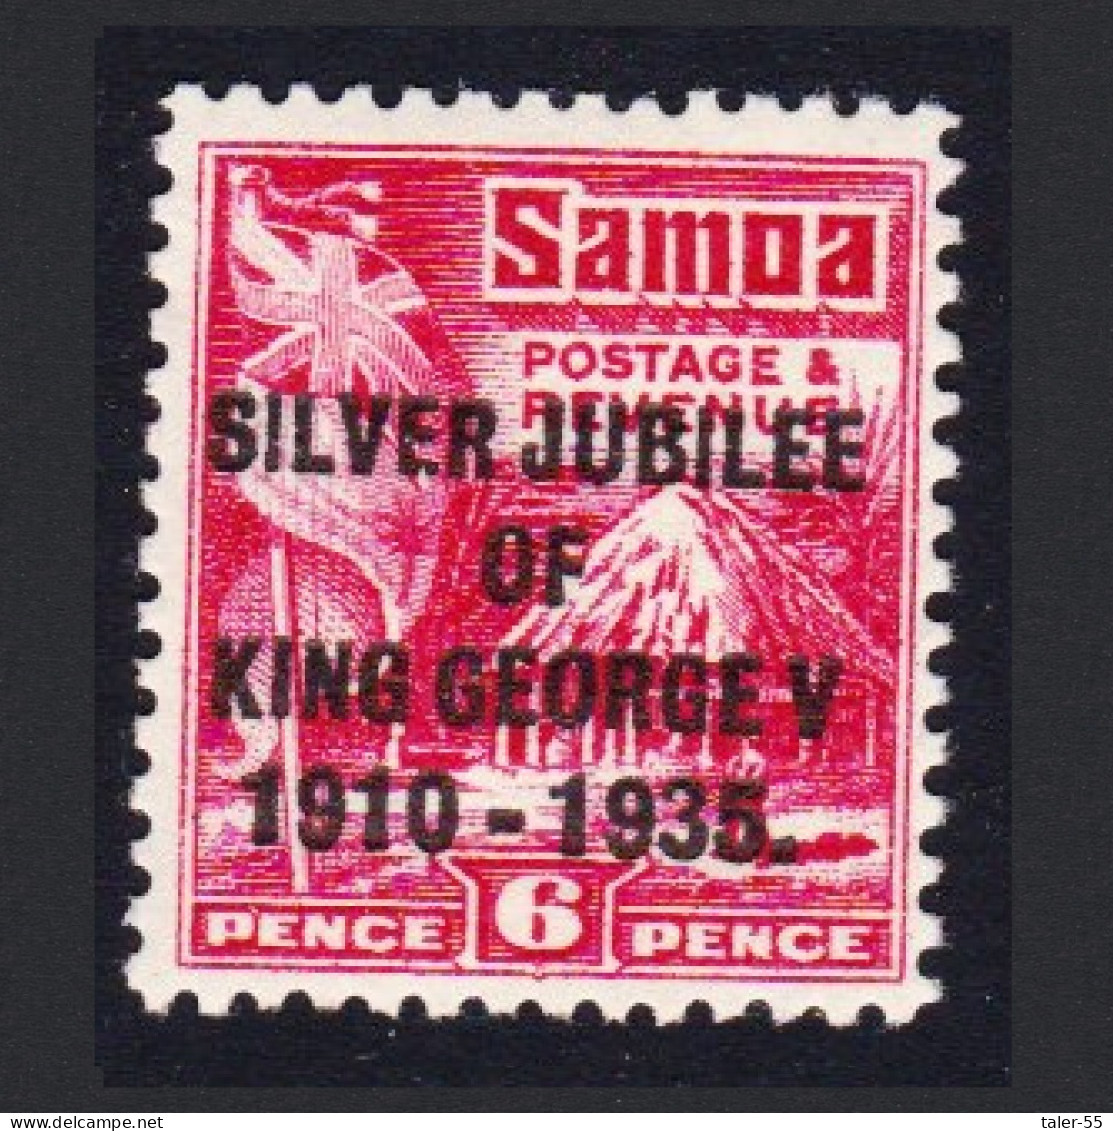 Samoa George V Silver Jubilee 6 Pence 1935 MH SG#179 - Samoa